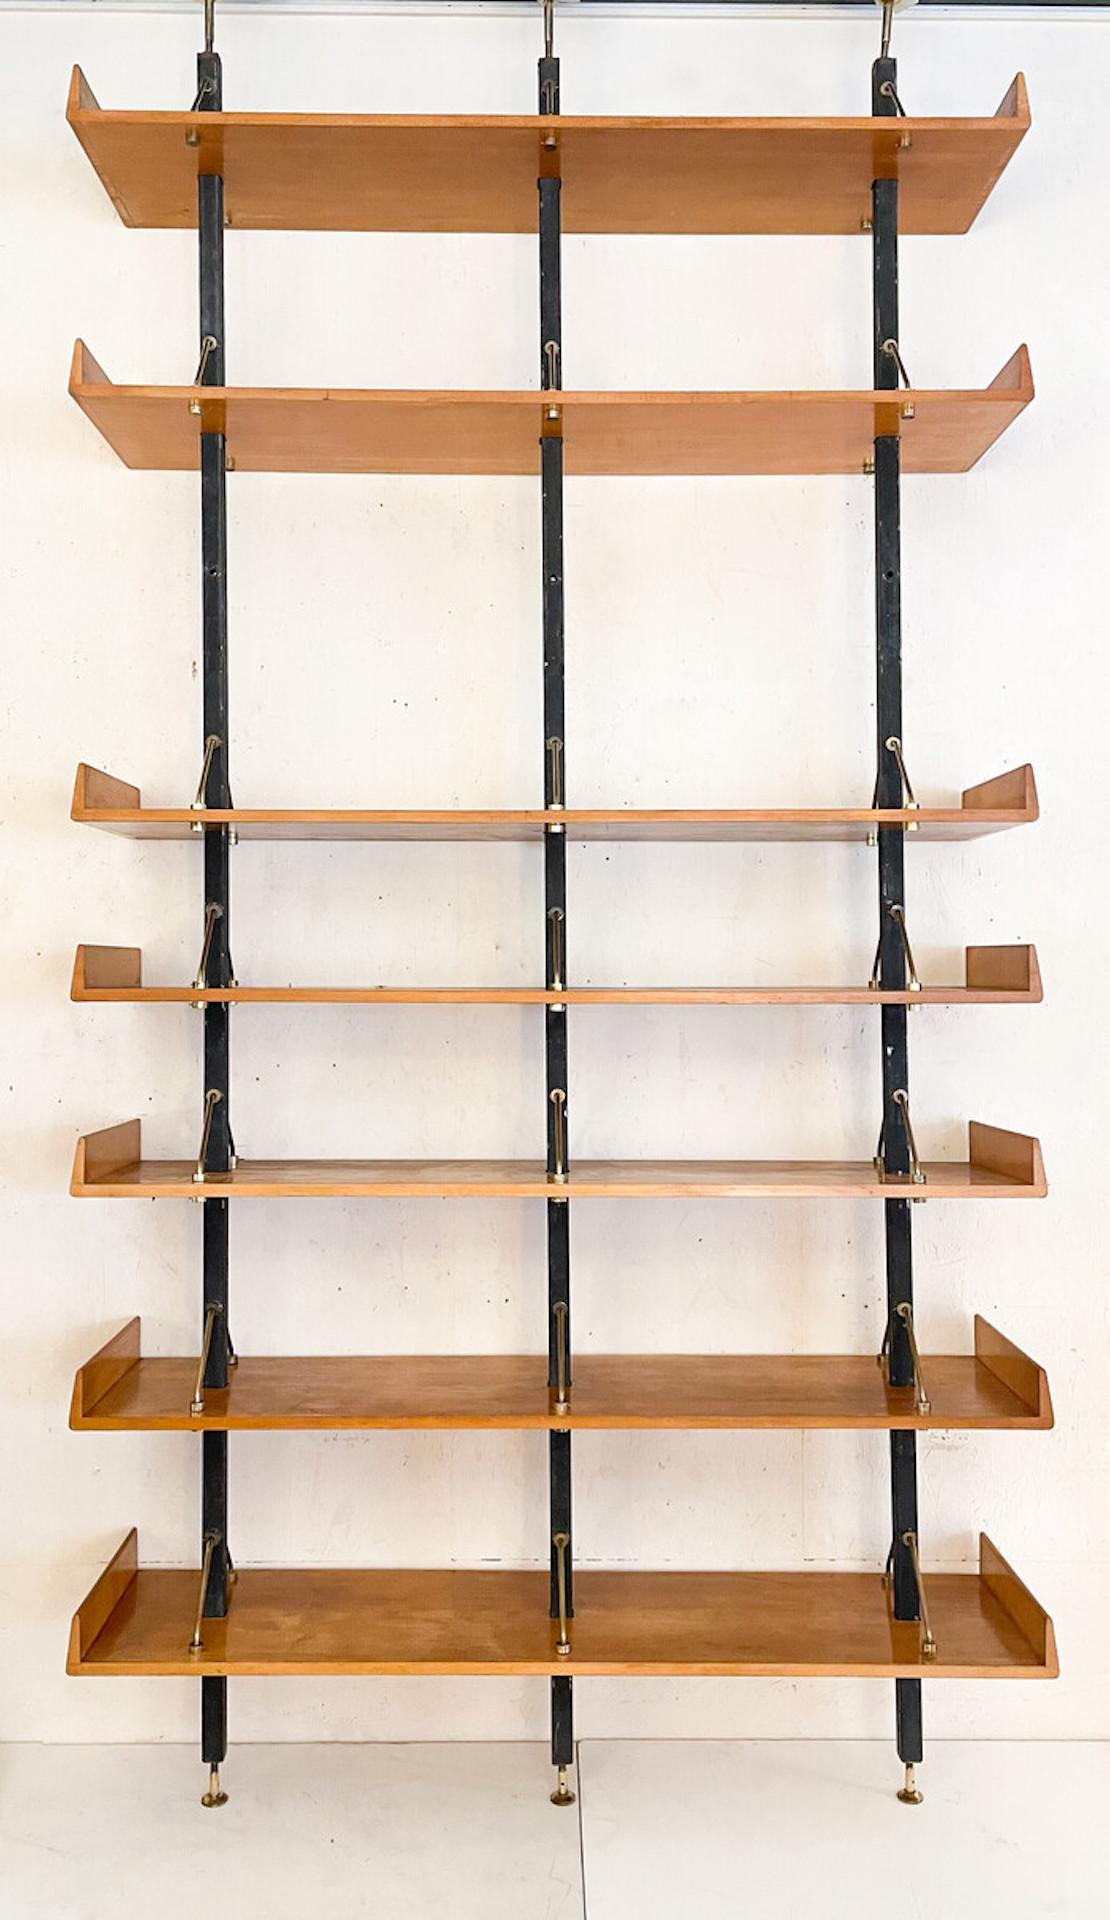 Mid-Century Modern Bookshelf by Angelo Mangiarotti and Bruno Morassutti, Italy, 1950s

Height is modular. 